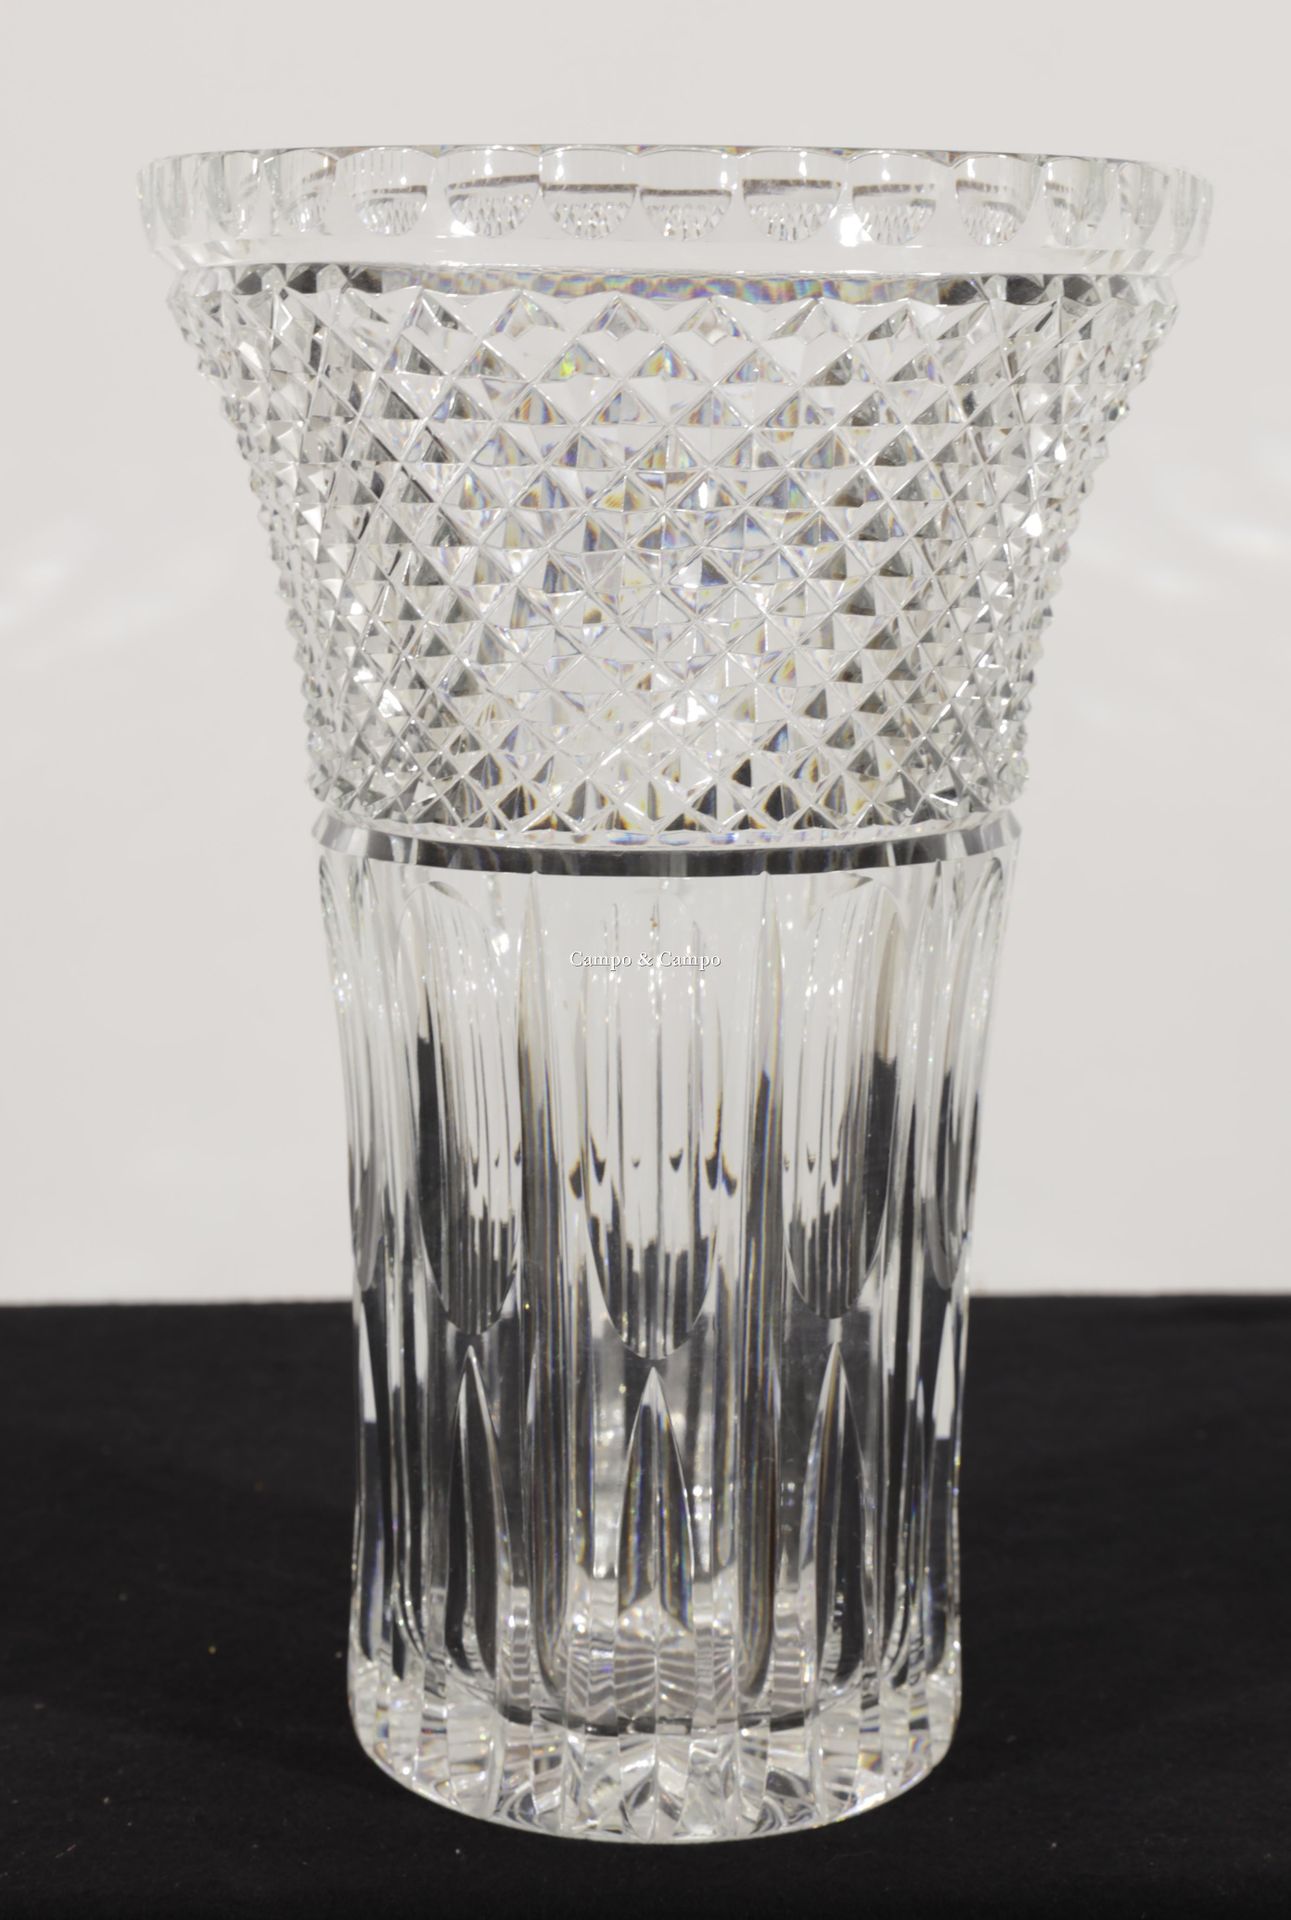 VARIA Vaso di cristallo chiaro, forse cristallo di Boemia
Vaas van helder krista&hellip;